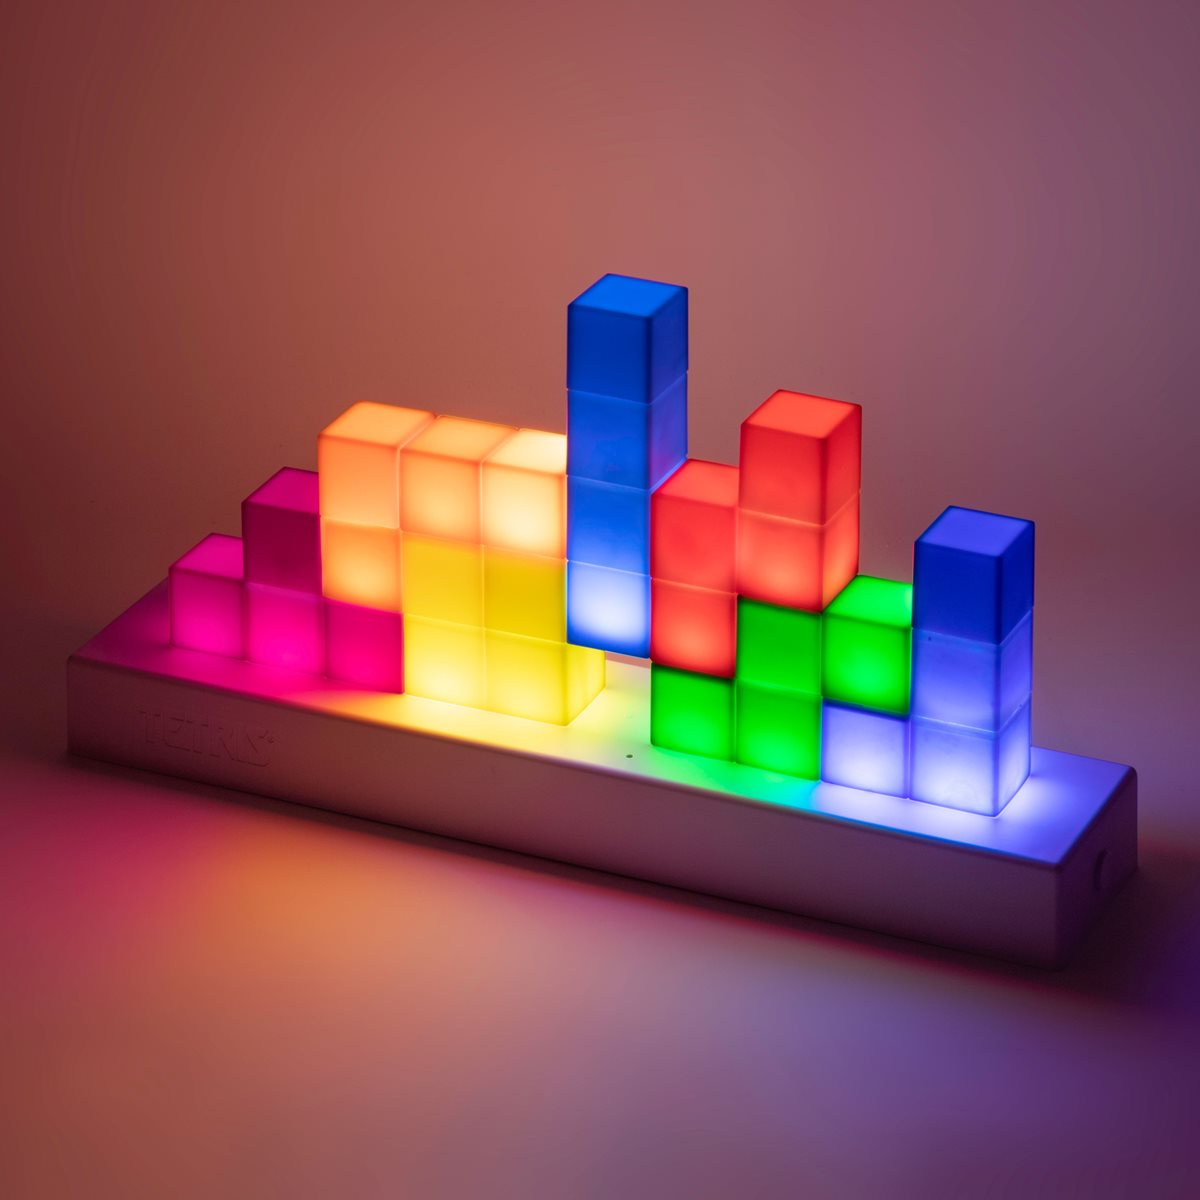 Giant Illuminated Game Pieces: Jumbo Tetris Blocks Light Up Sydney